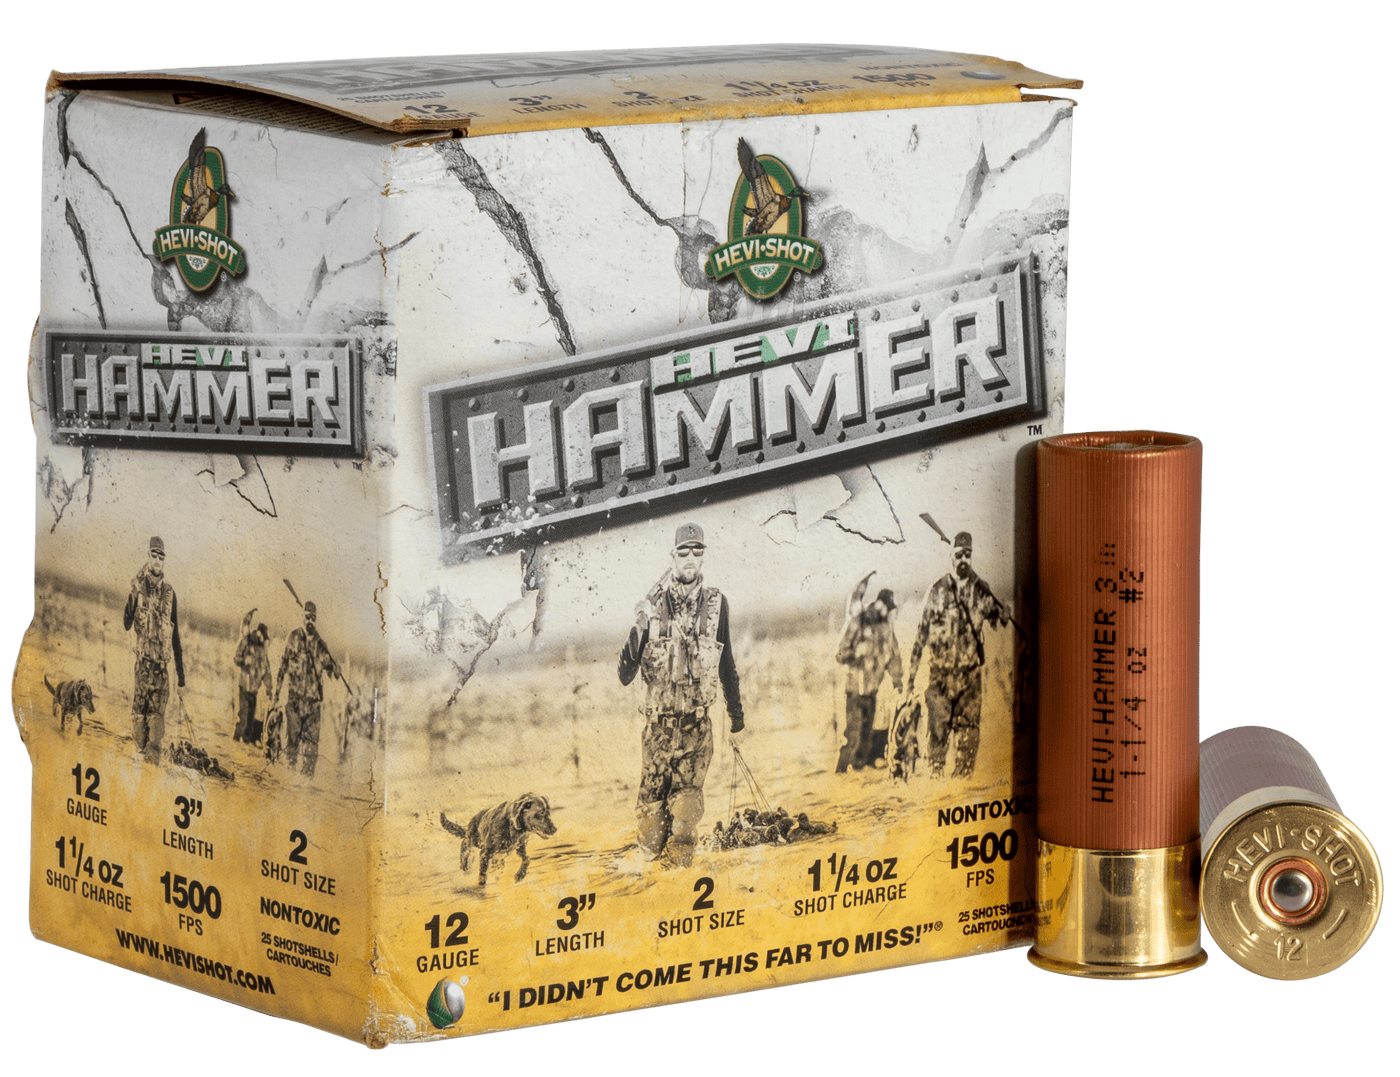 Hevishot Hevi Shot Hevi Hammer Load 12 Ga. 3 In. 2 Shot 1 1/4 Oz. 25 Rd. Ammo